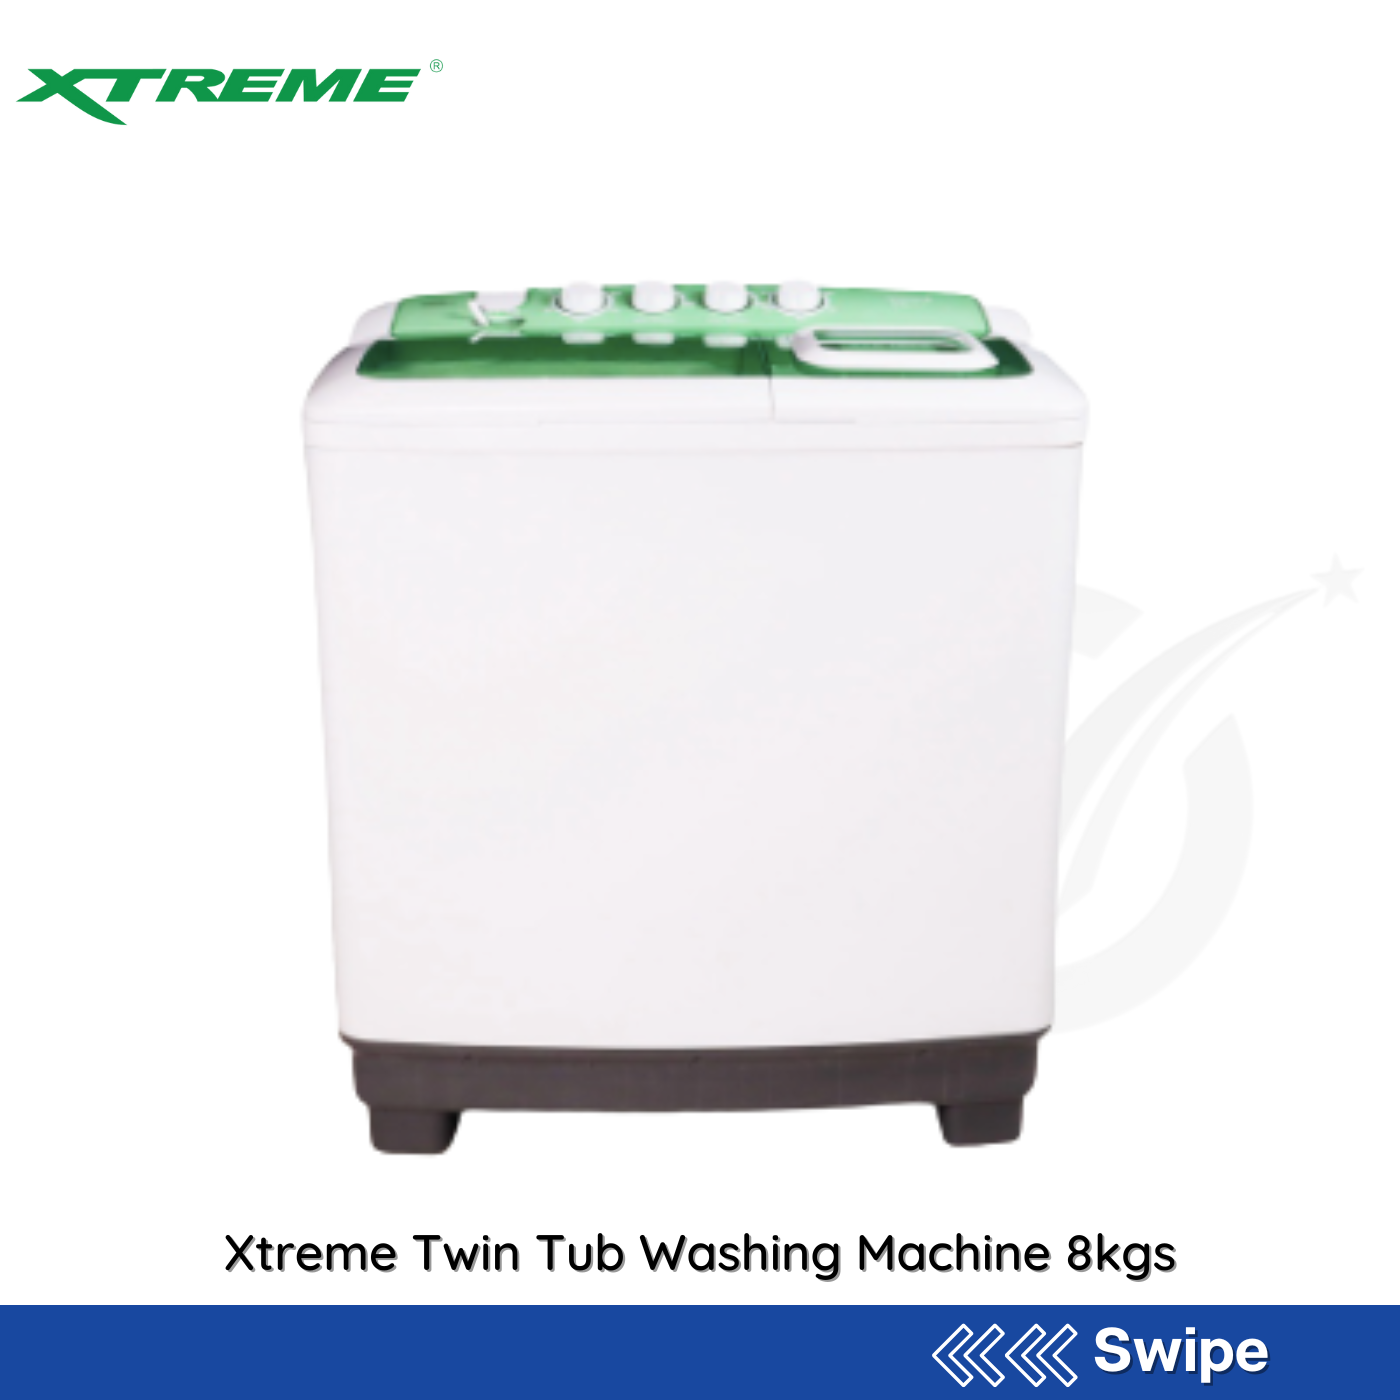 Xtreme Twin Tub Washing Machine 8kgs